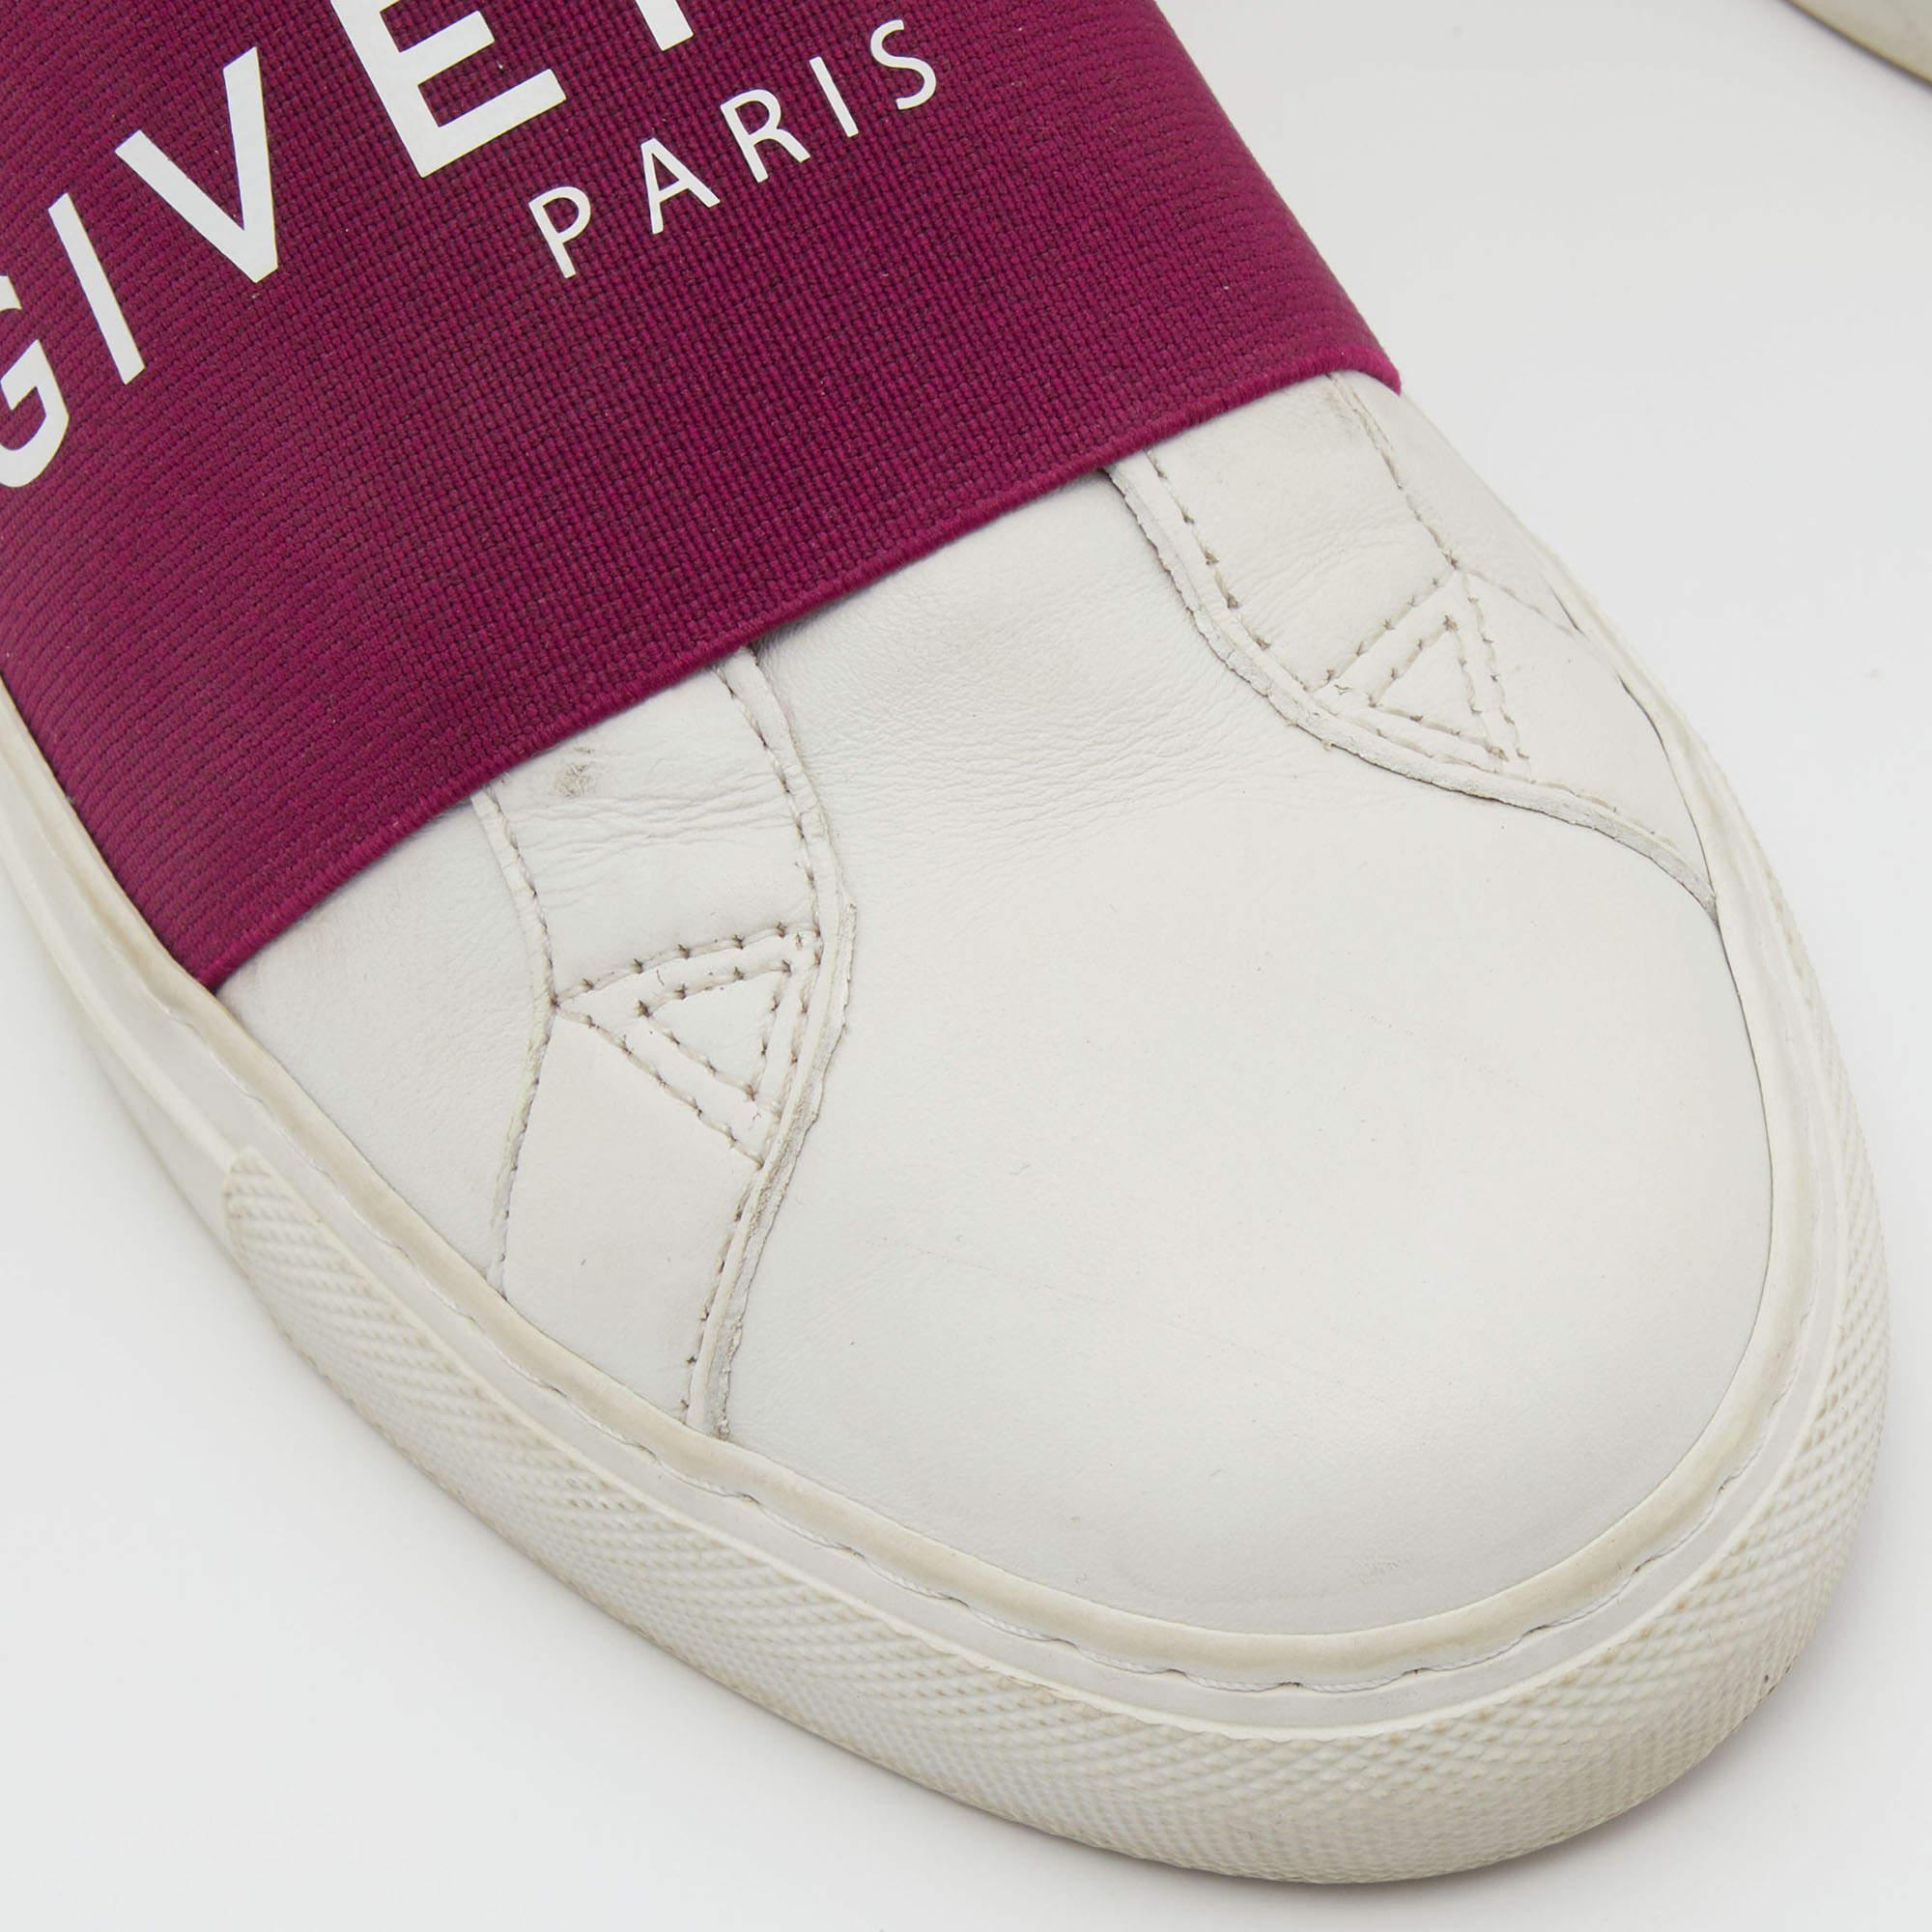 Givenchy White/Plum Leather Urban Street Slip On Sneakers Size 36 3